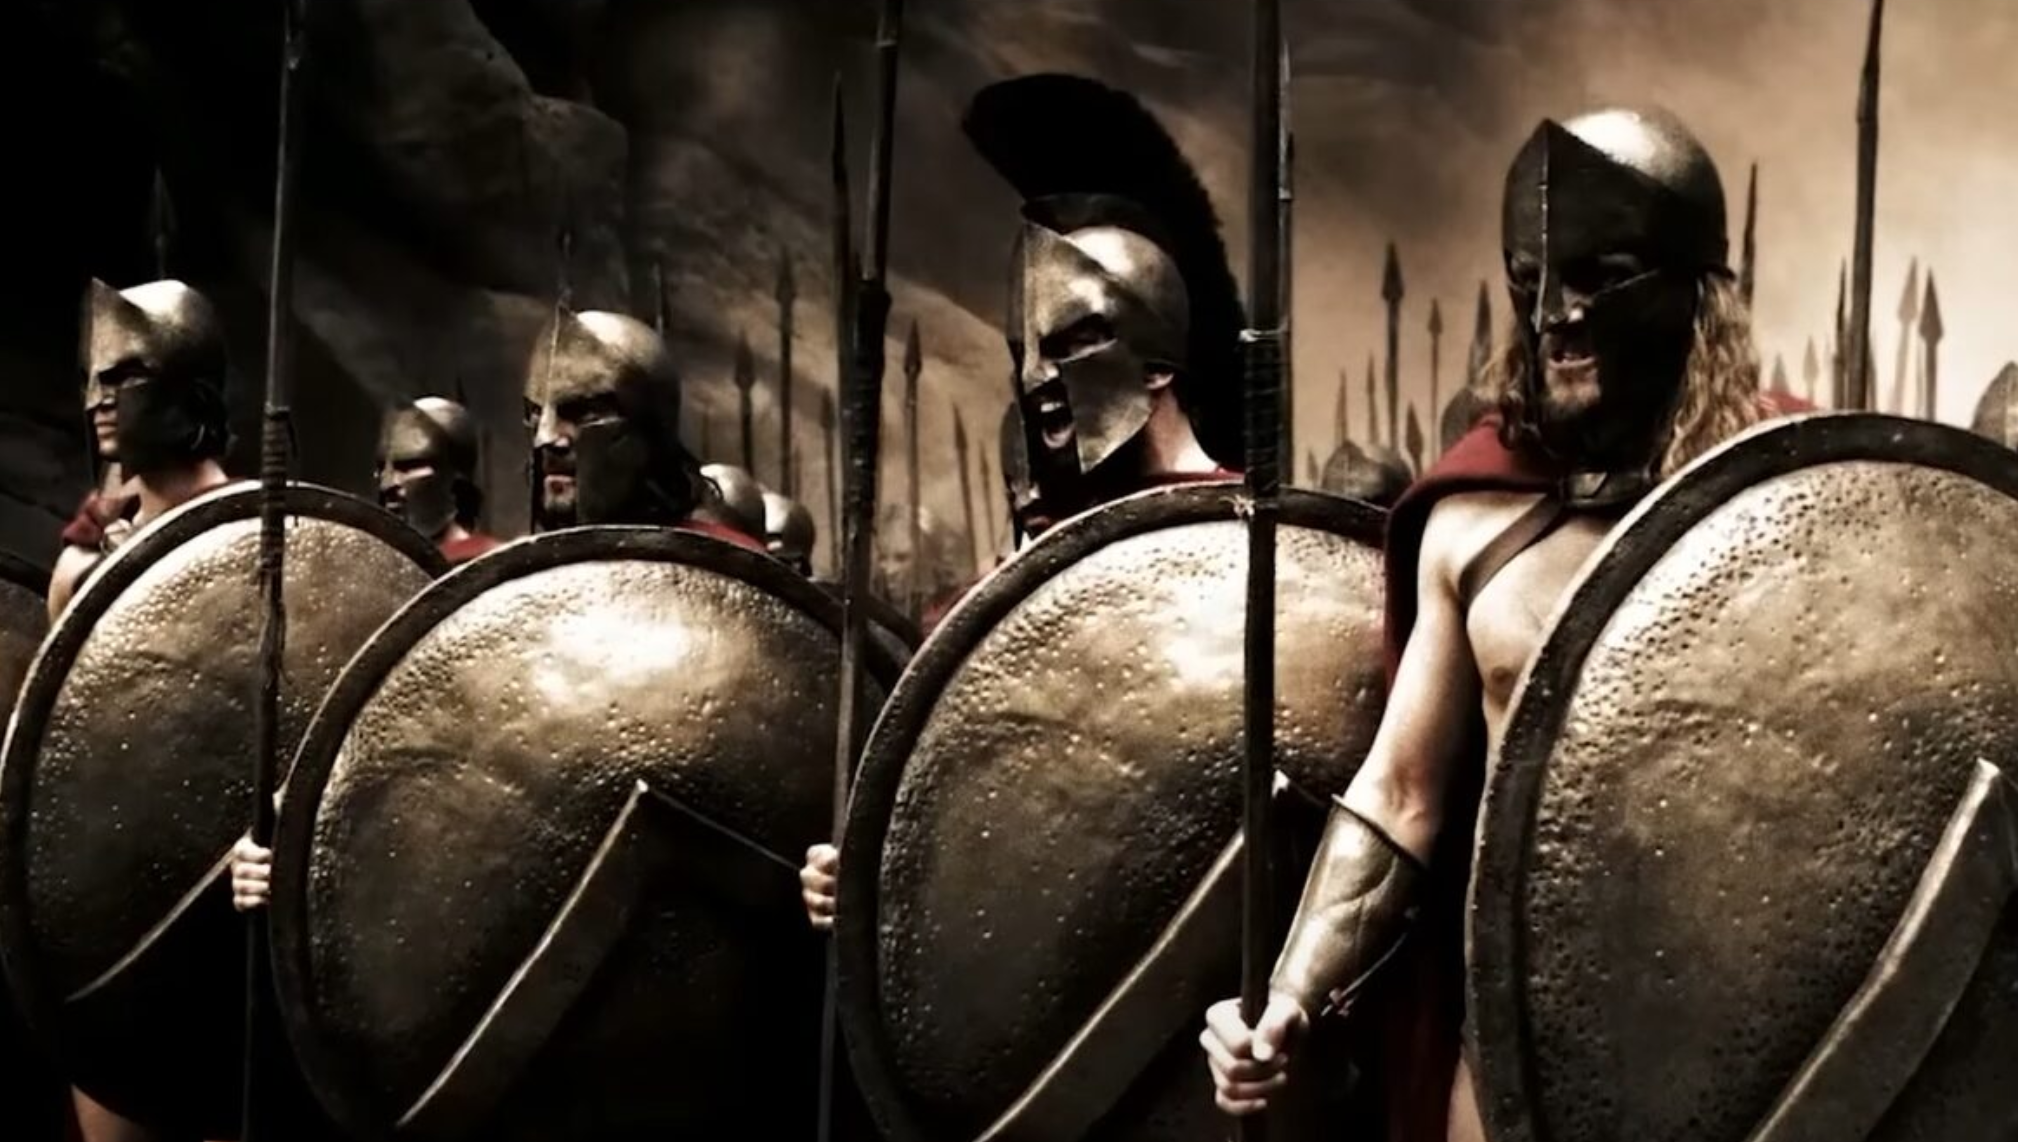 persian army vs spartans